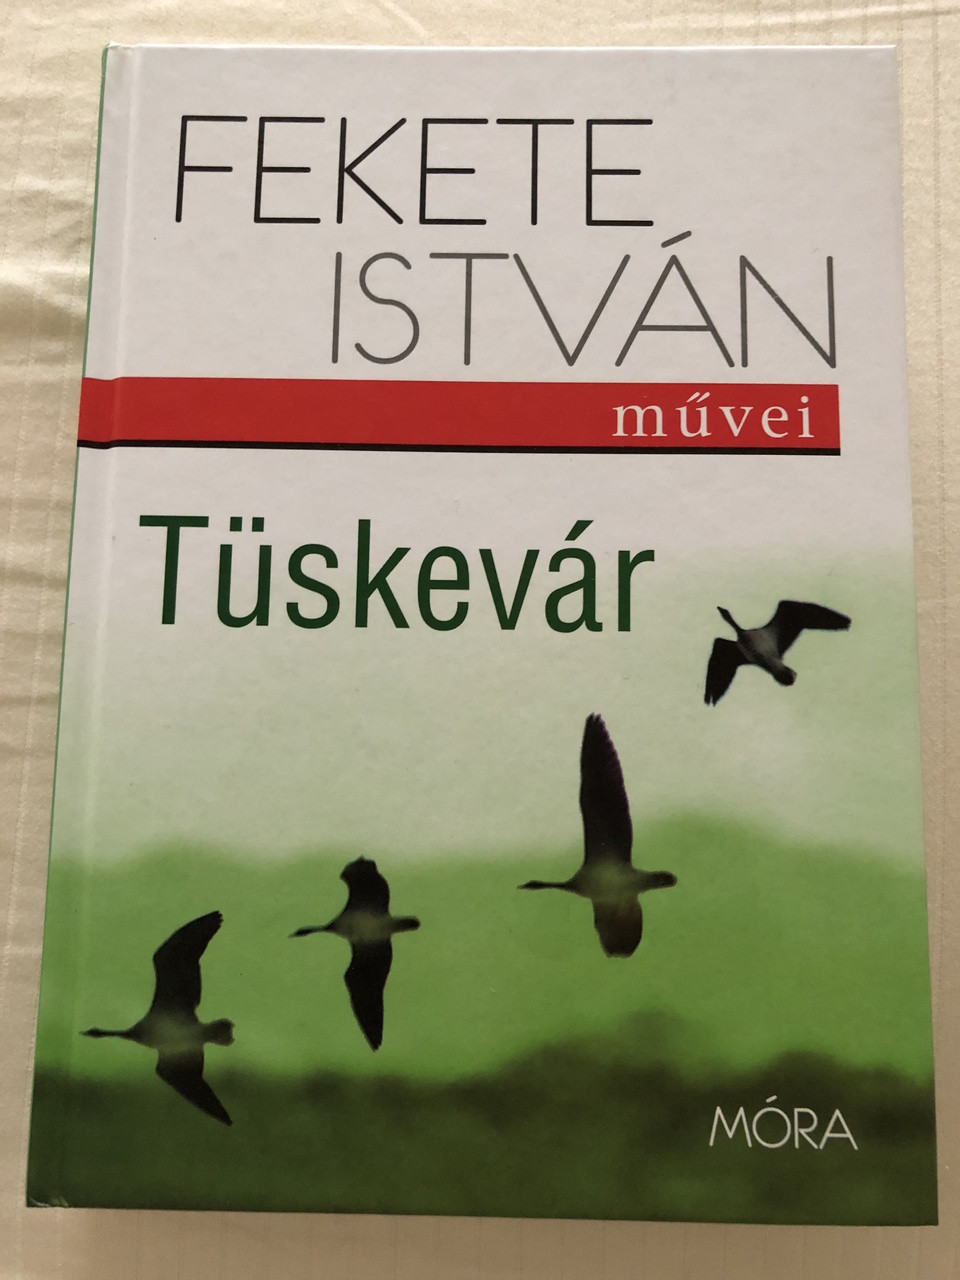 Fekete István - Tüskevár - Thorn Castle / 17th Edition / ILLUSTRATED  HUNGARIAN LANGUAGE CLASSIC LITERATURE - bibleinmylanguage